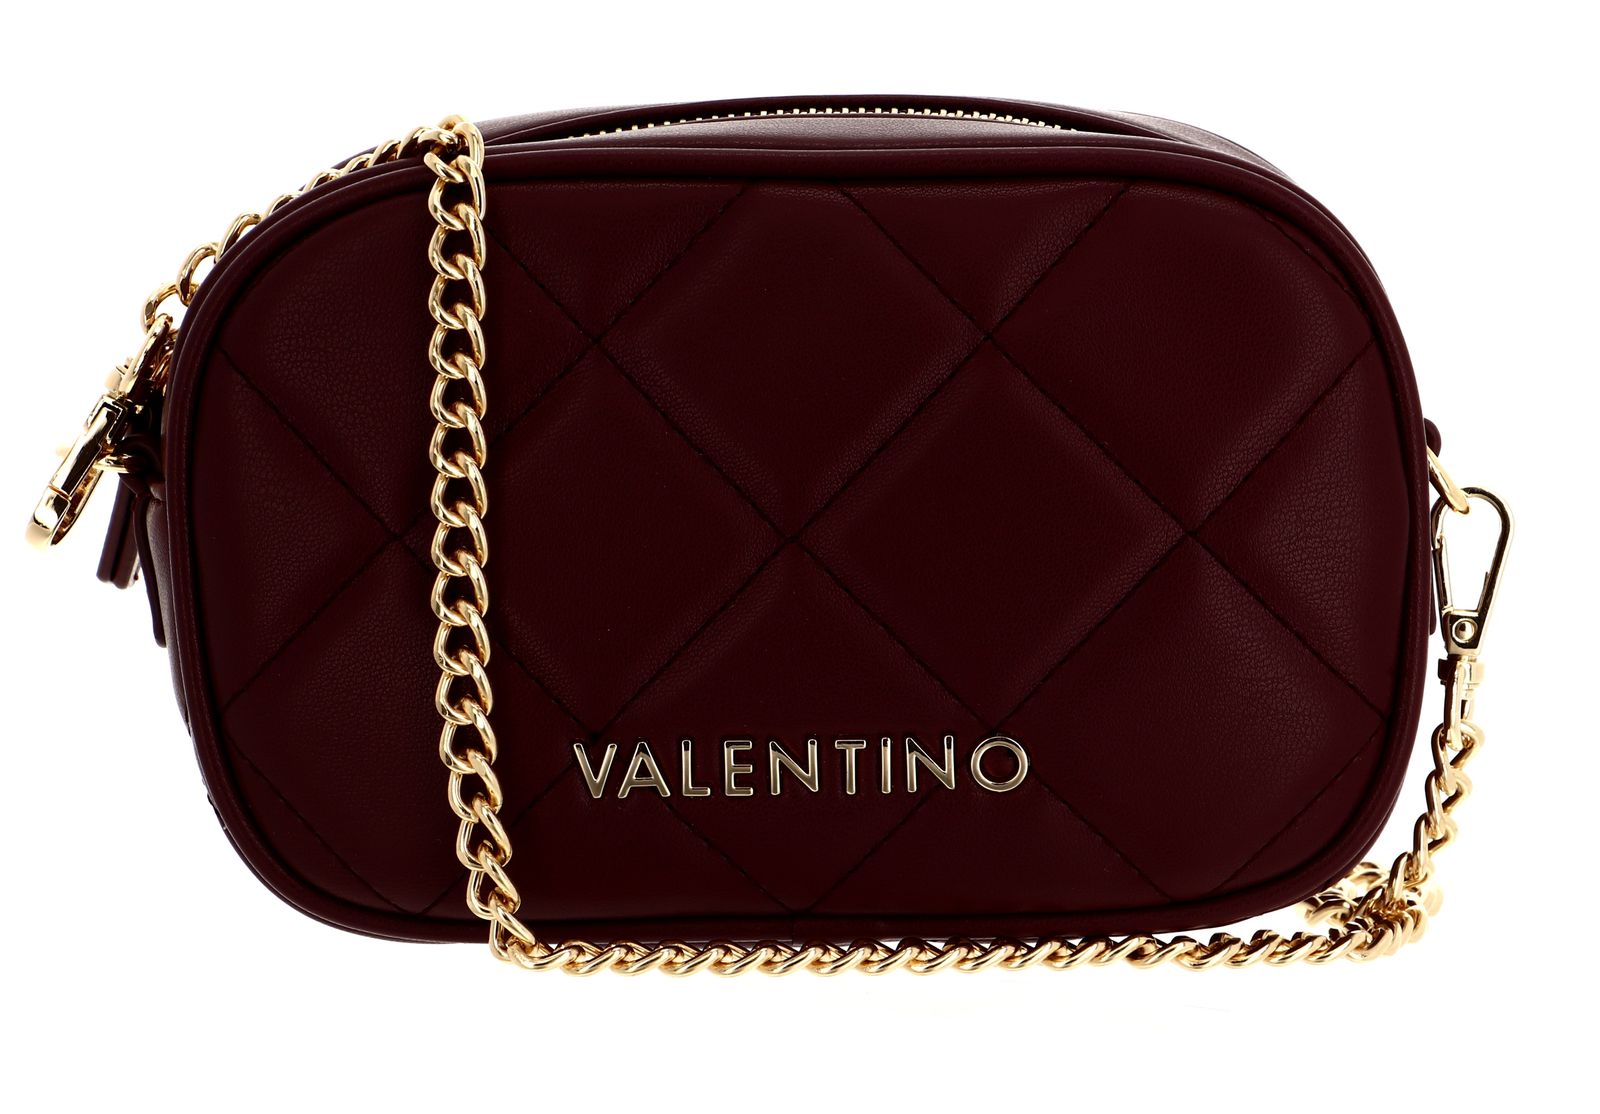 VALENTINO Belt Bag Vino | Buy bags, purses & accessories online | modeherz